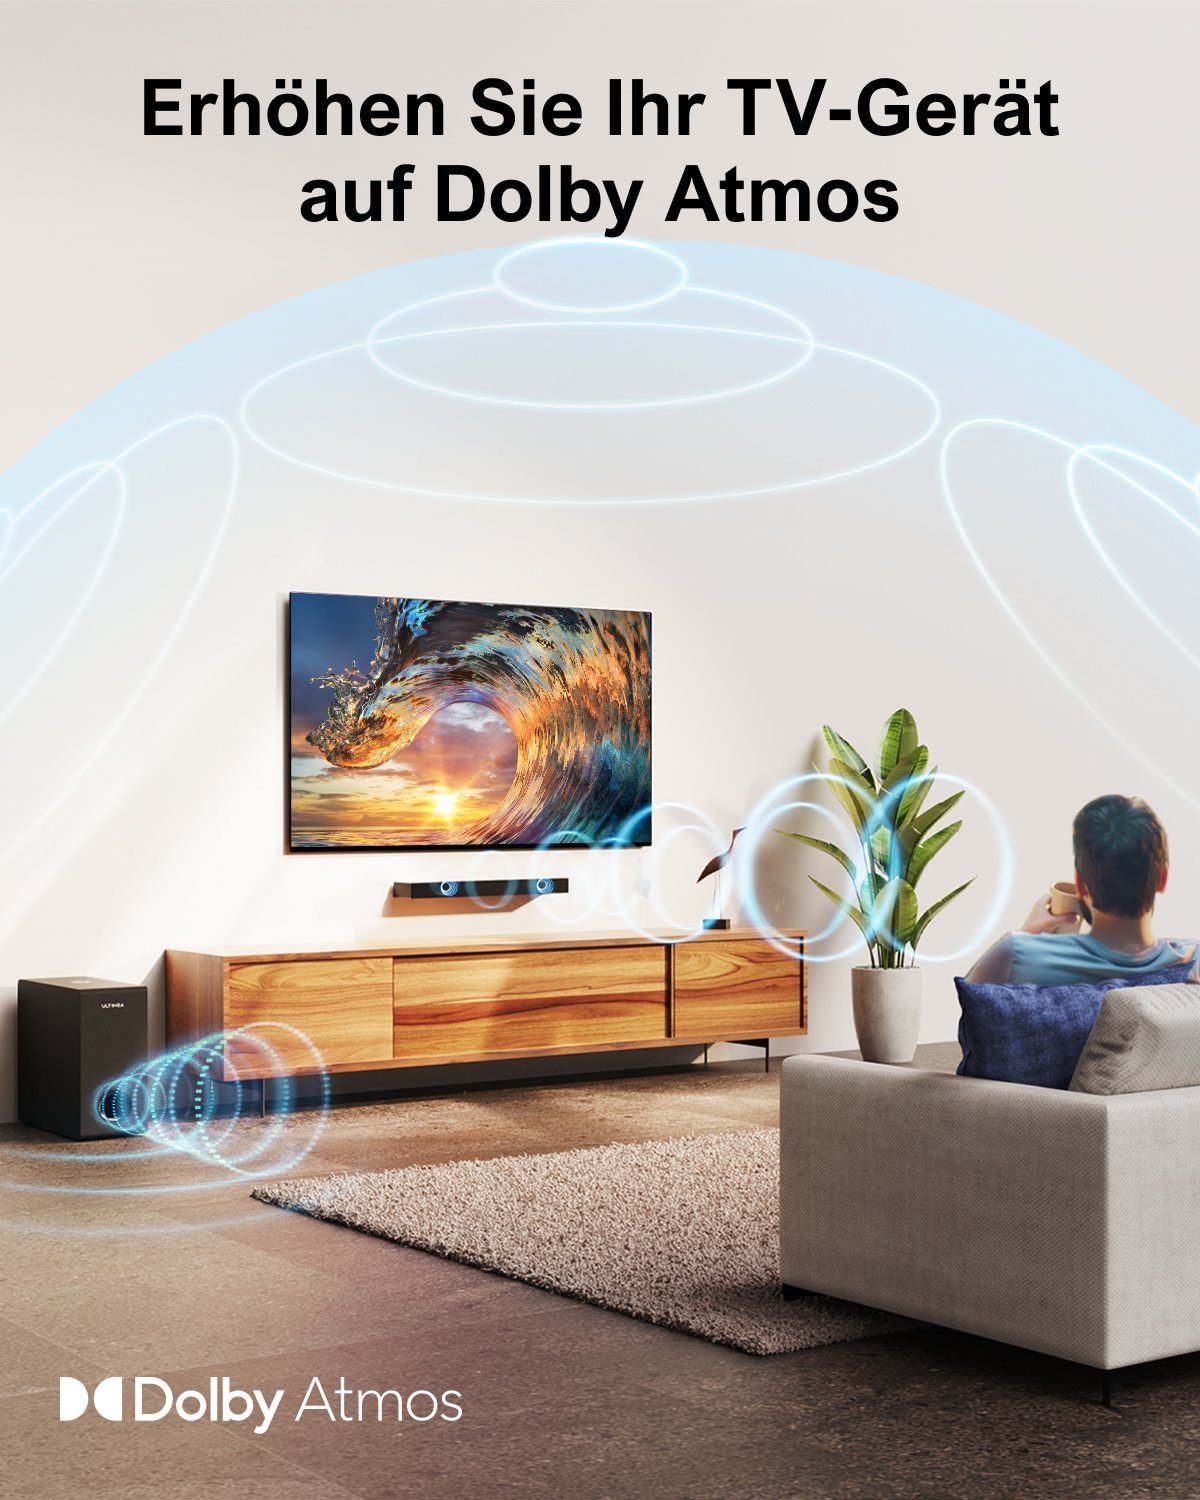 Ultimea Nova S50 2.1 Bass Verbesserter Dolby Soundbar Atmos Lautsprecher, (190 eARC) HDMI 3D W, Surround, Dolby TV Atmos